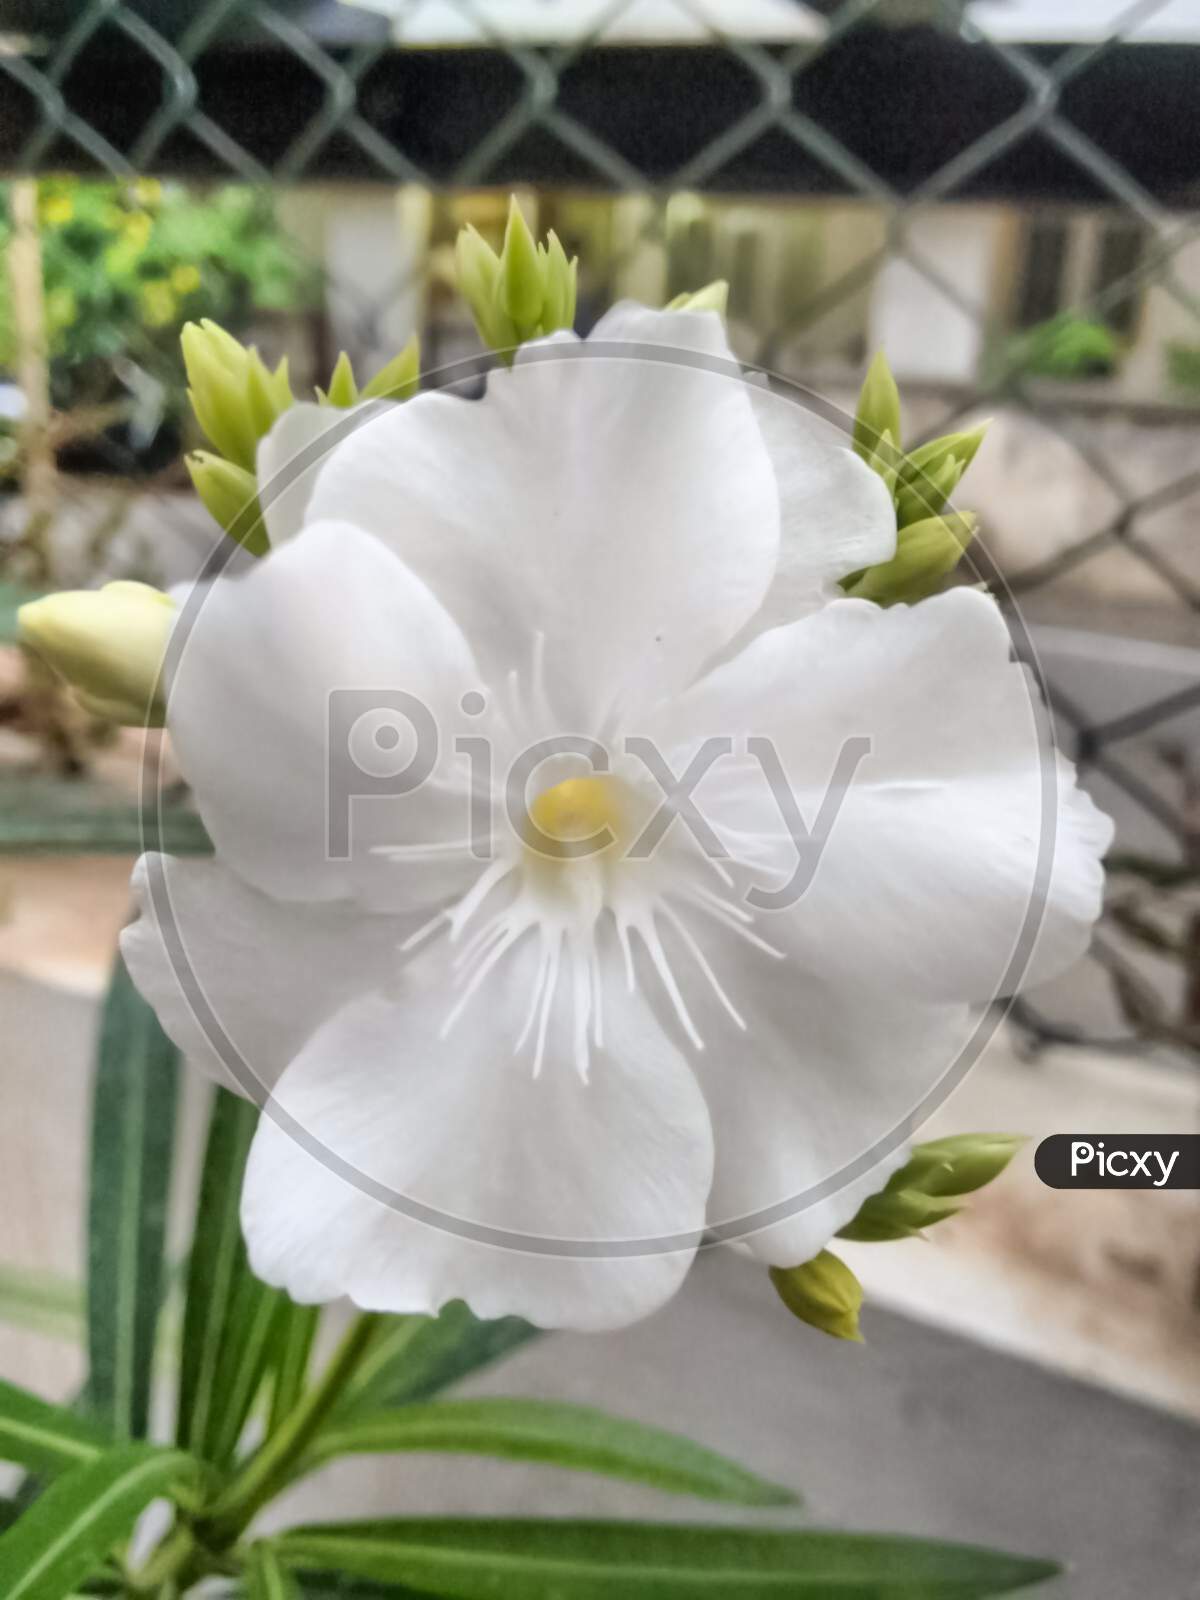 White flower macro focused